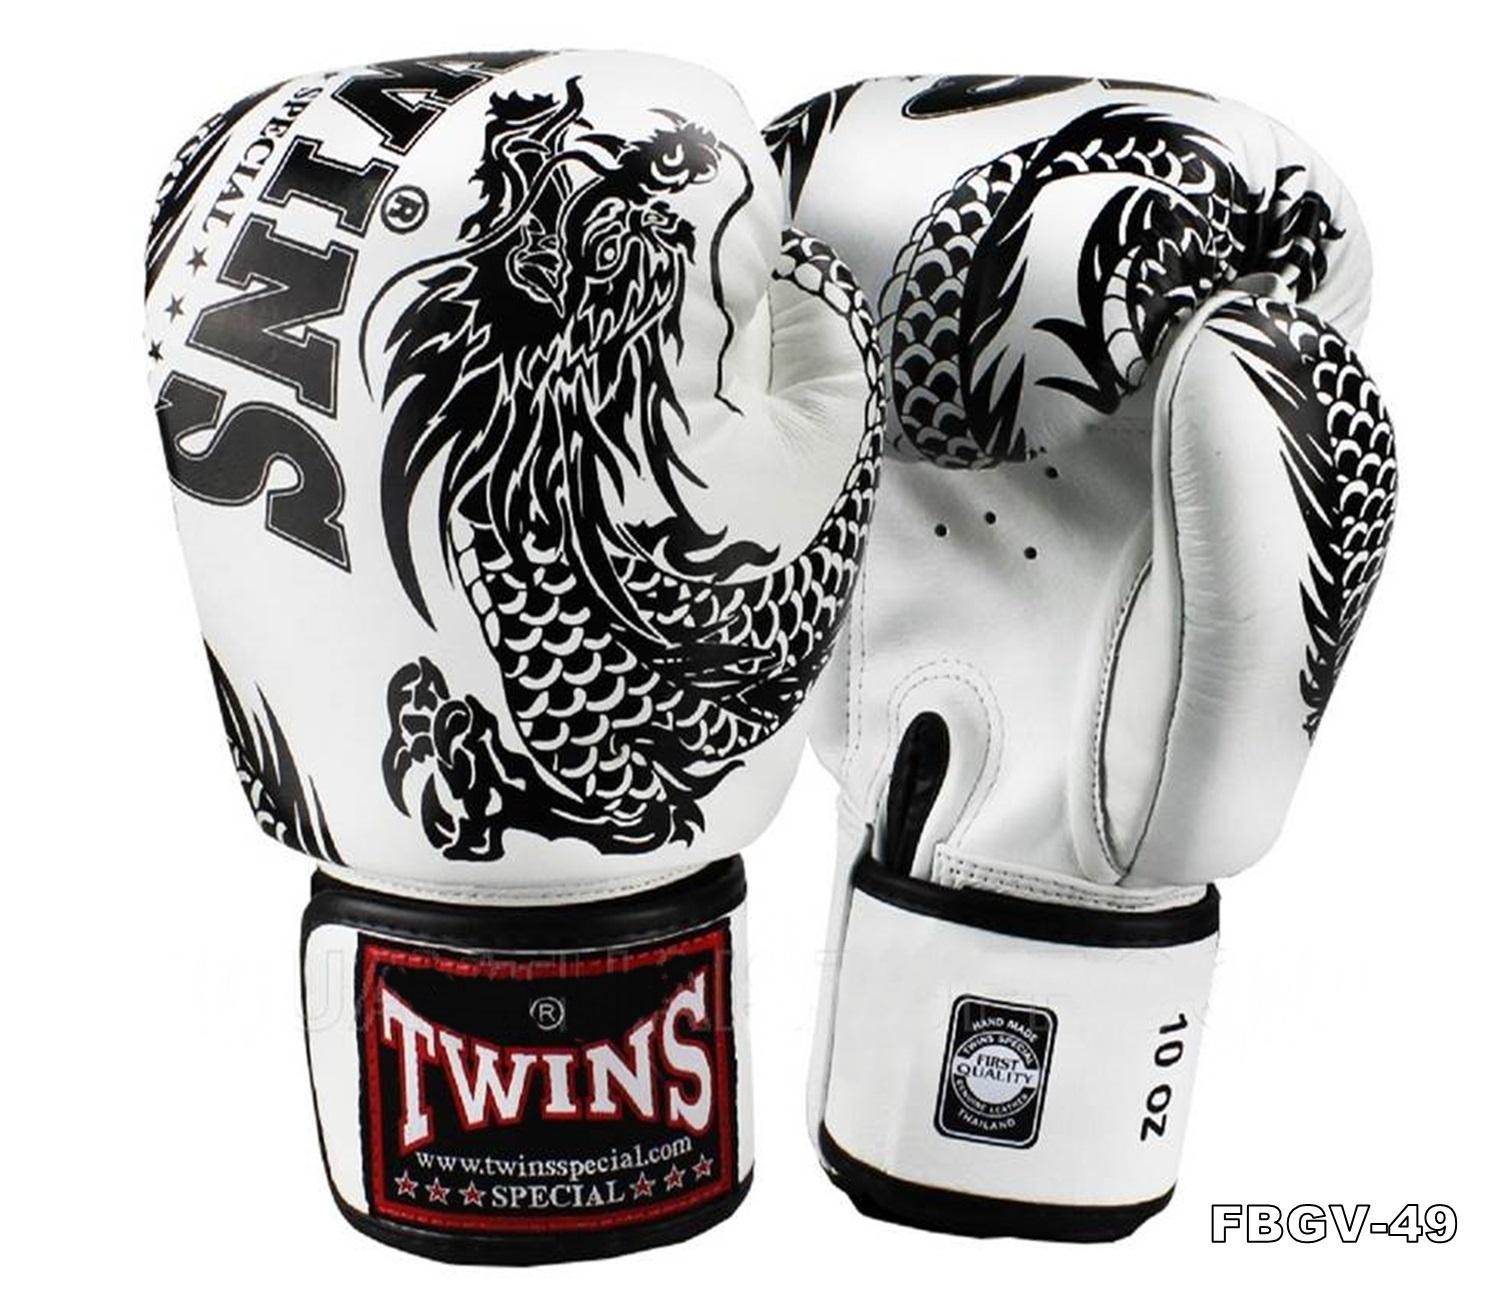 Twins special Boxing Gloves FBGV-49 White Black Dragon 8,10,12,14,16 oz Muay Thai Sparring MMA K1 นวมซ้อมชกทวินส์ สเปเชี่ยล สีขาว มังกรดำ หนังแท้ 100%